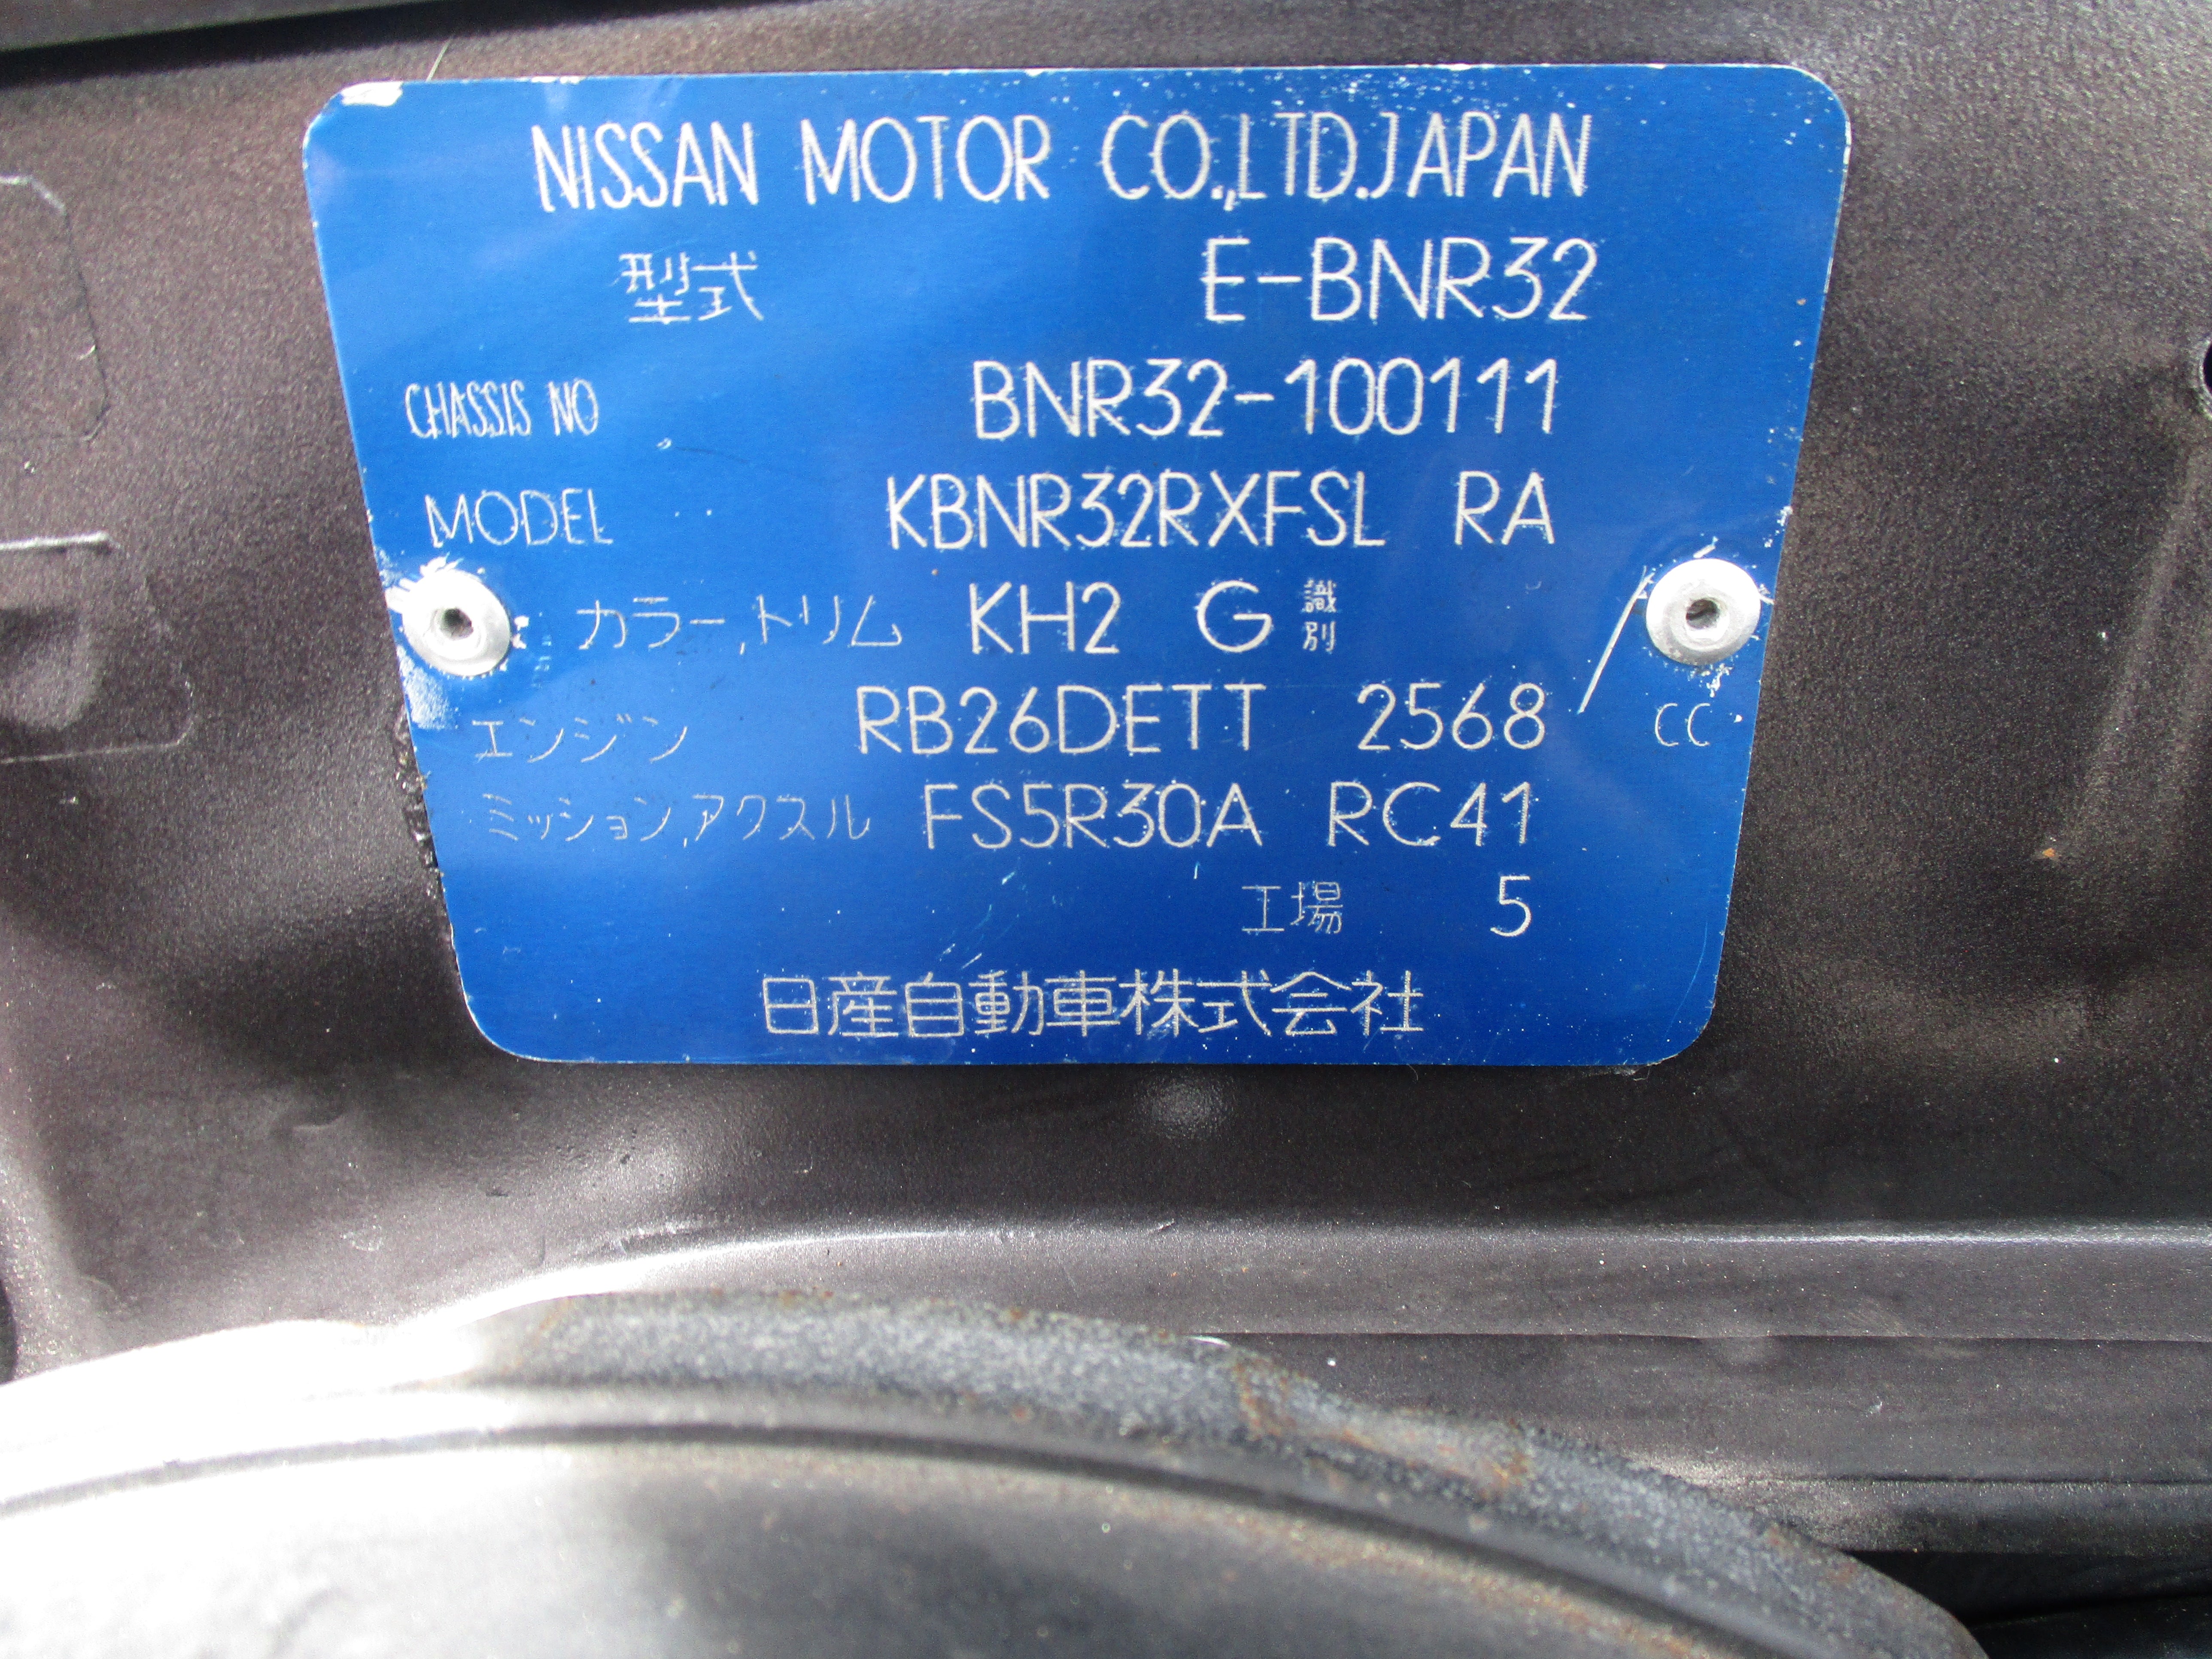 JDM 90 Nissan Skyline R32 GTR Nismo Super Rare 30k Miles Verified Sold